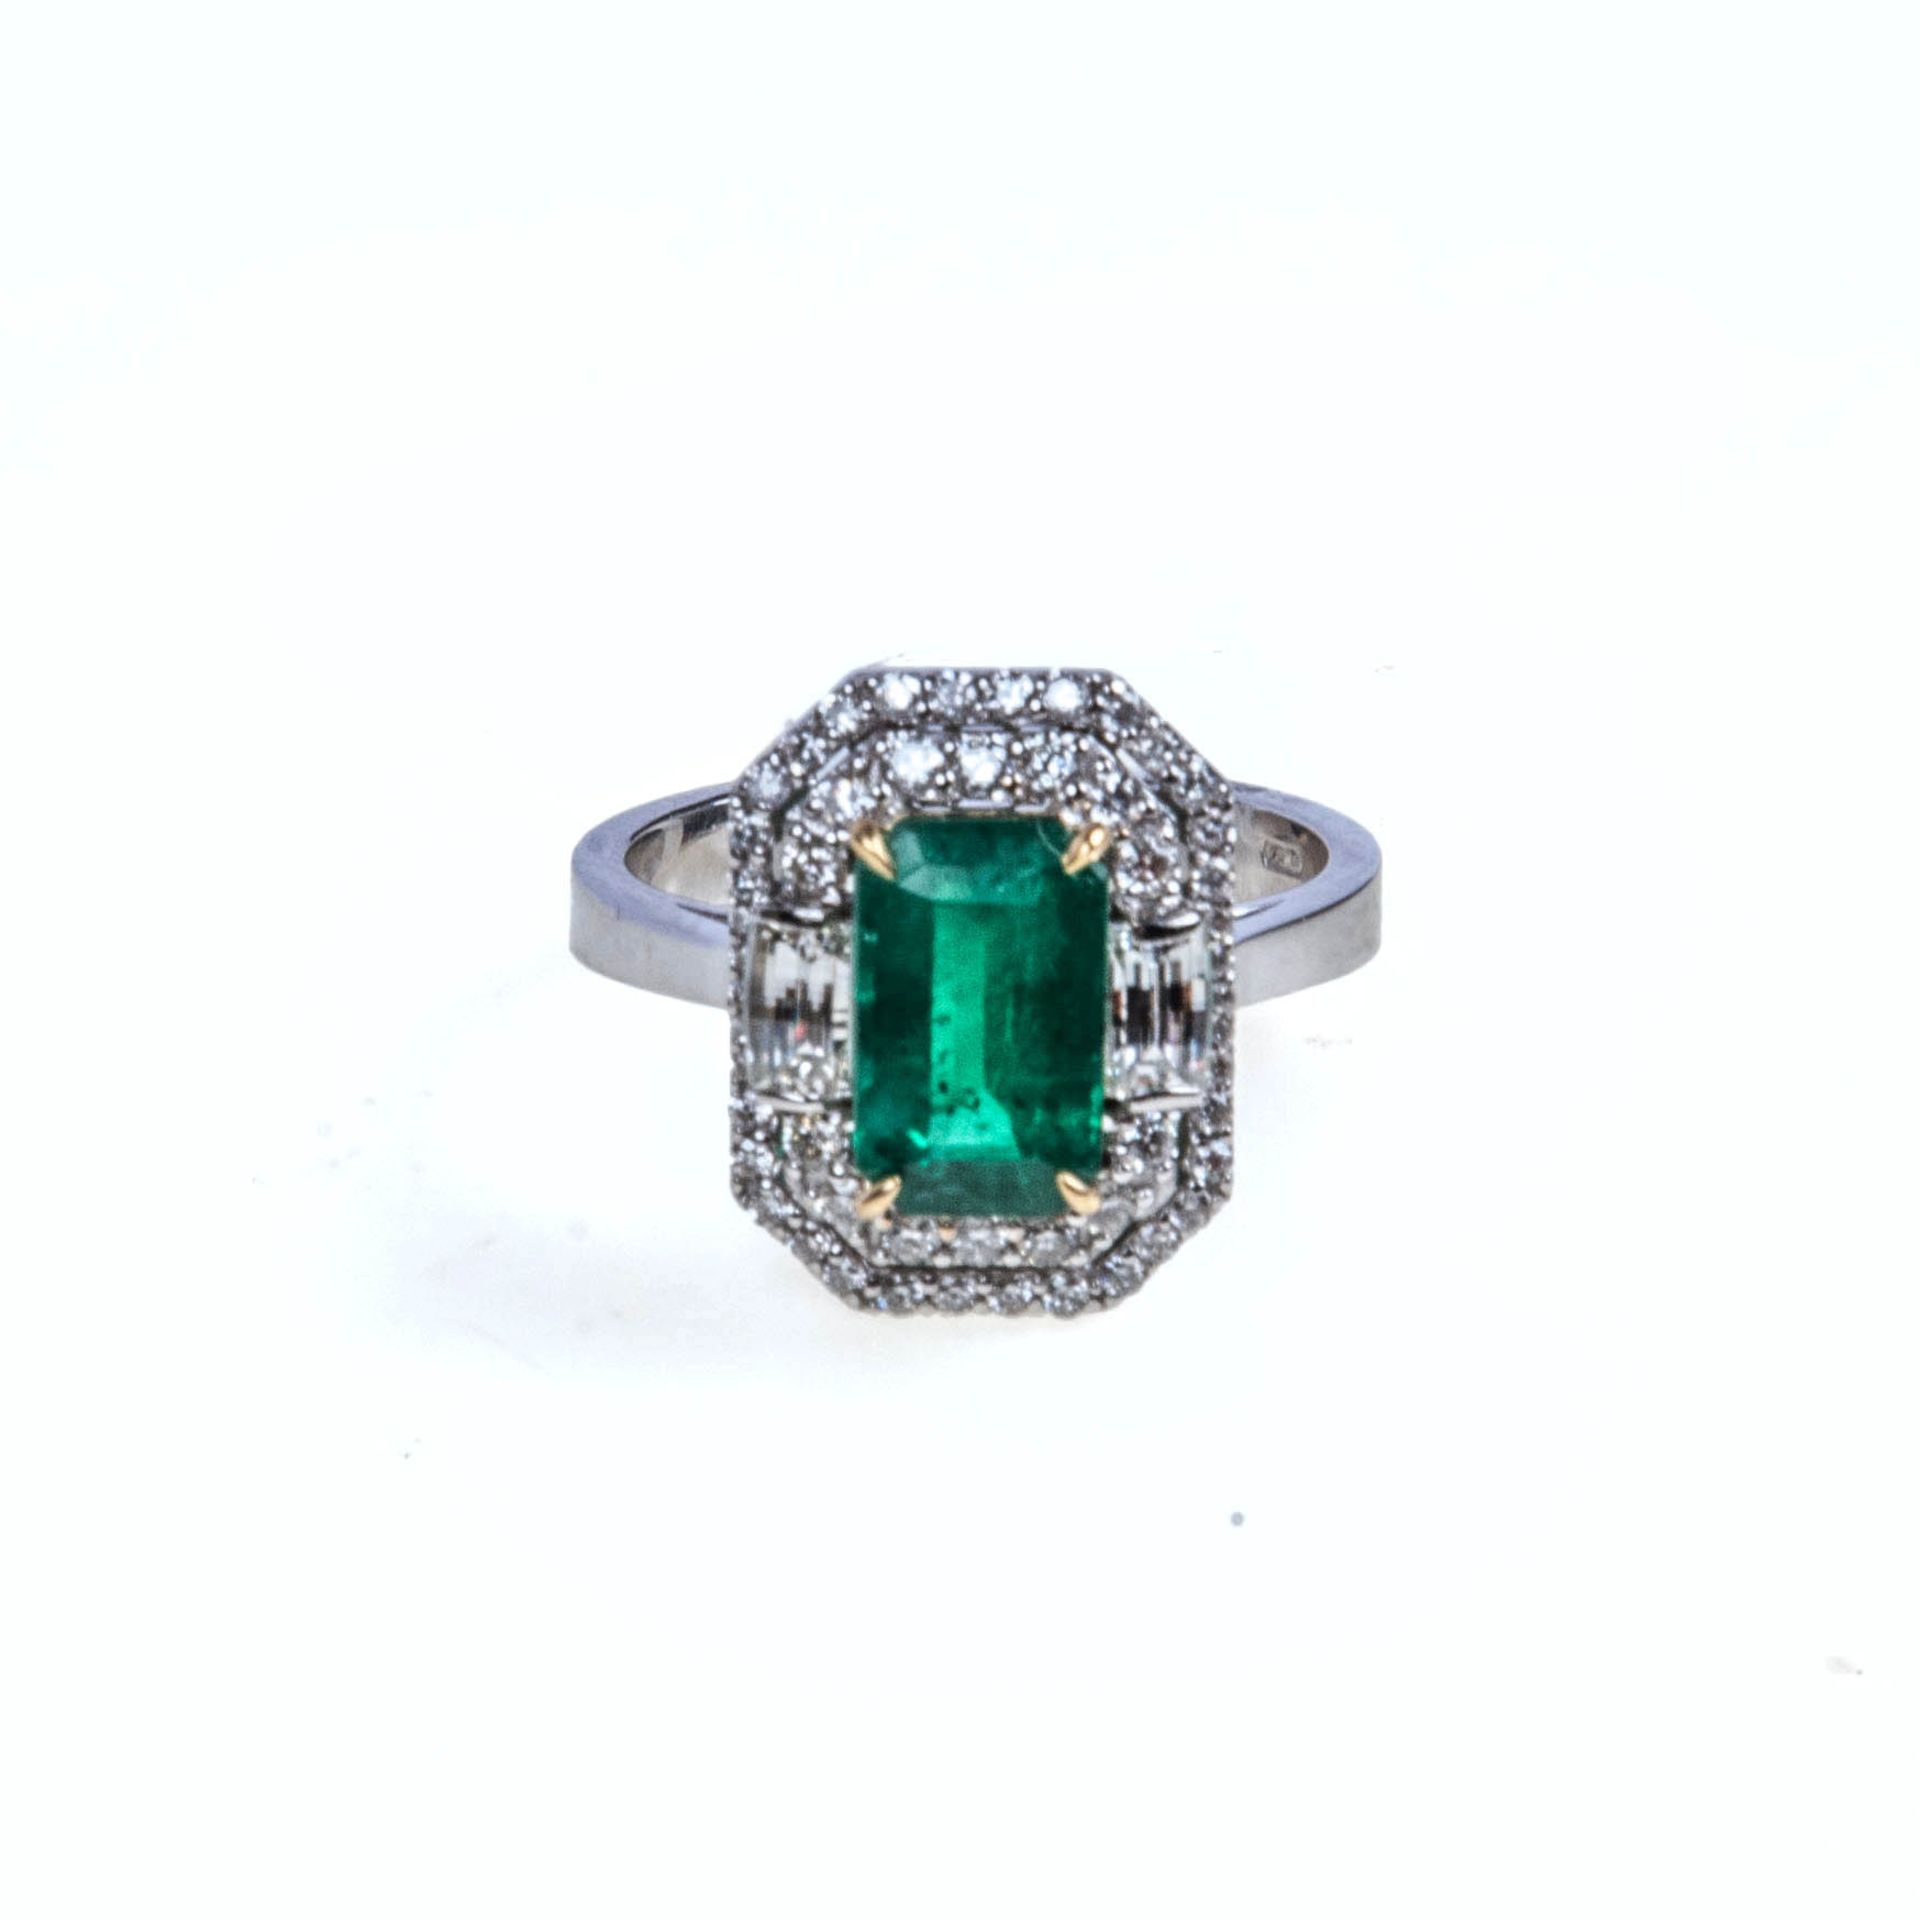 Smaragd-Brillant-Ring - Image 3 of 3